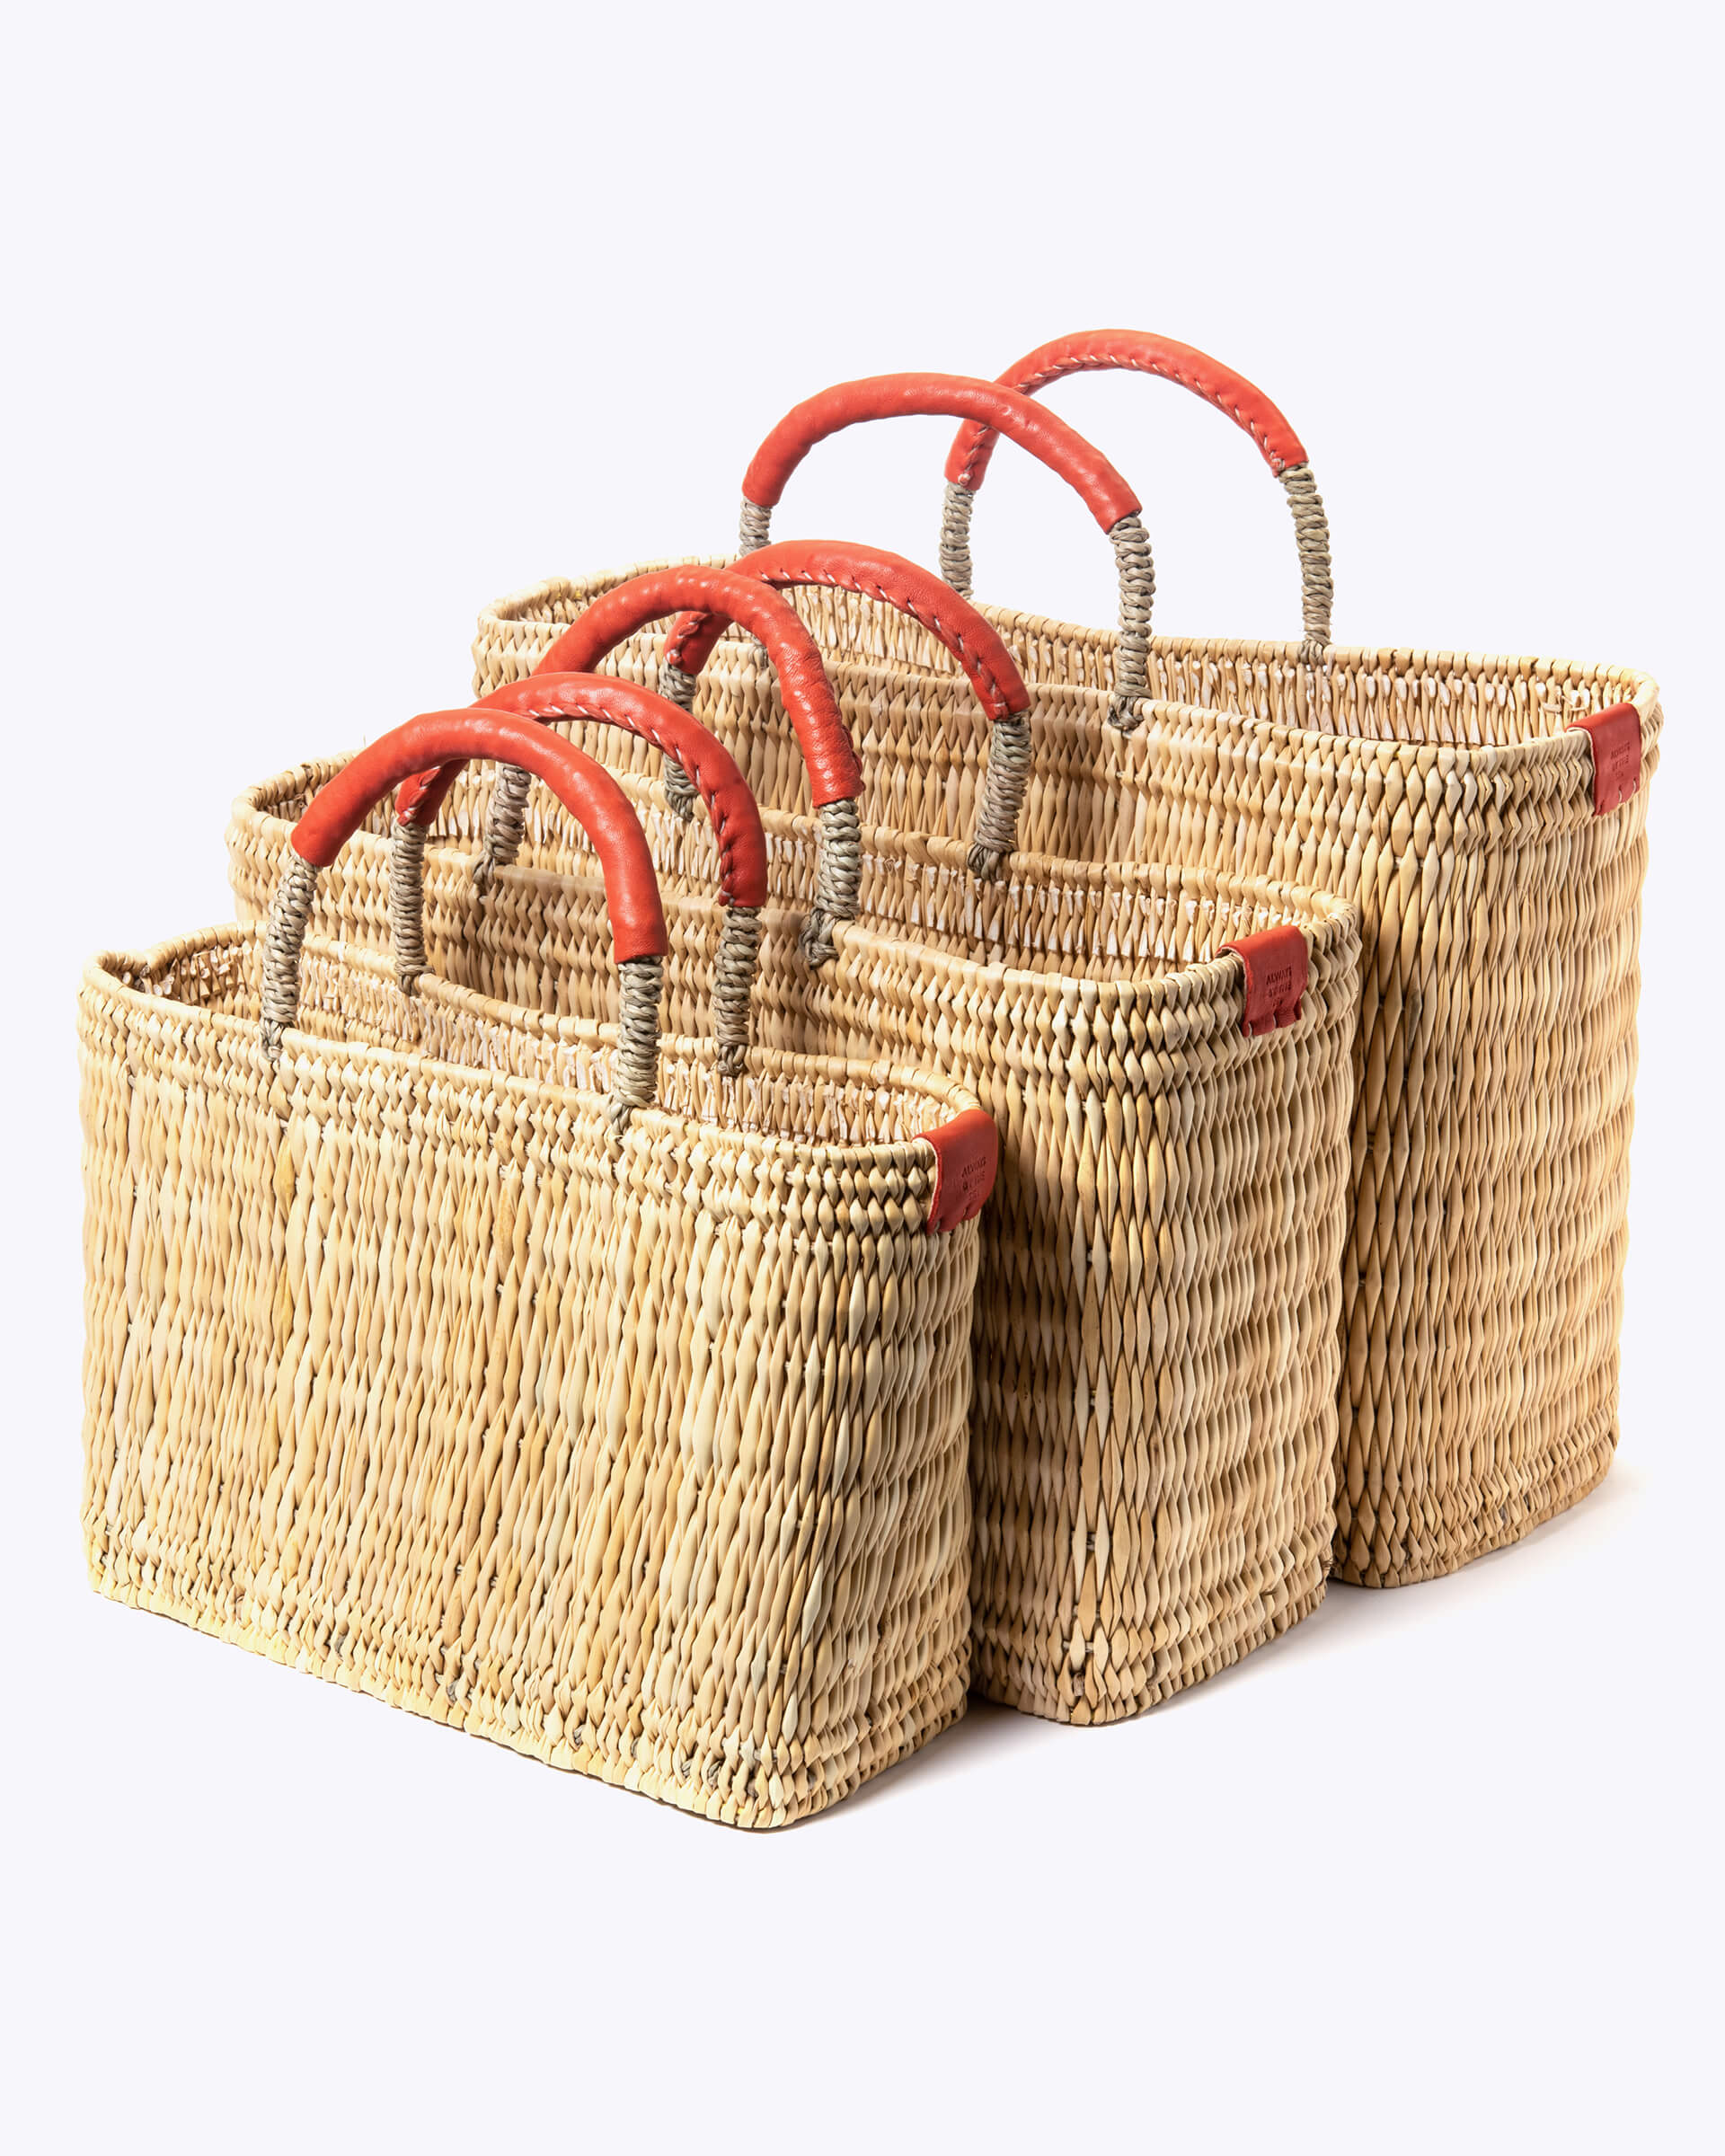 small, medium, large straw basket wrapped with orange leather handles on white background